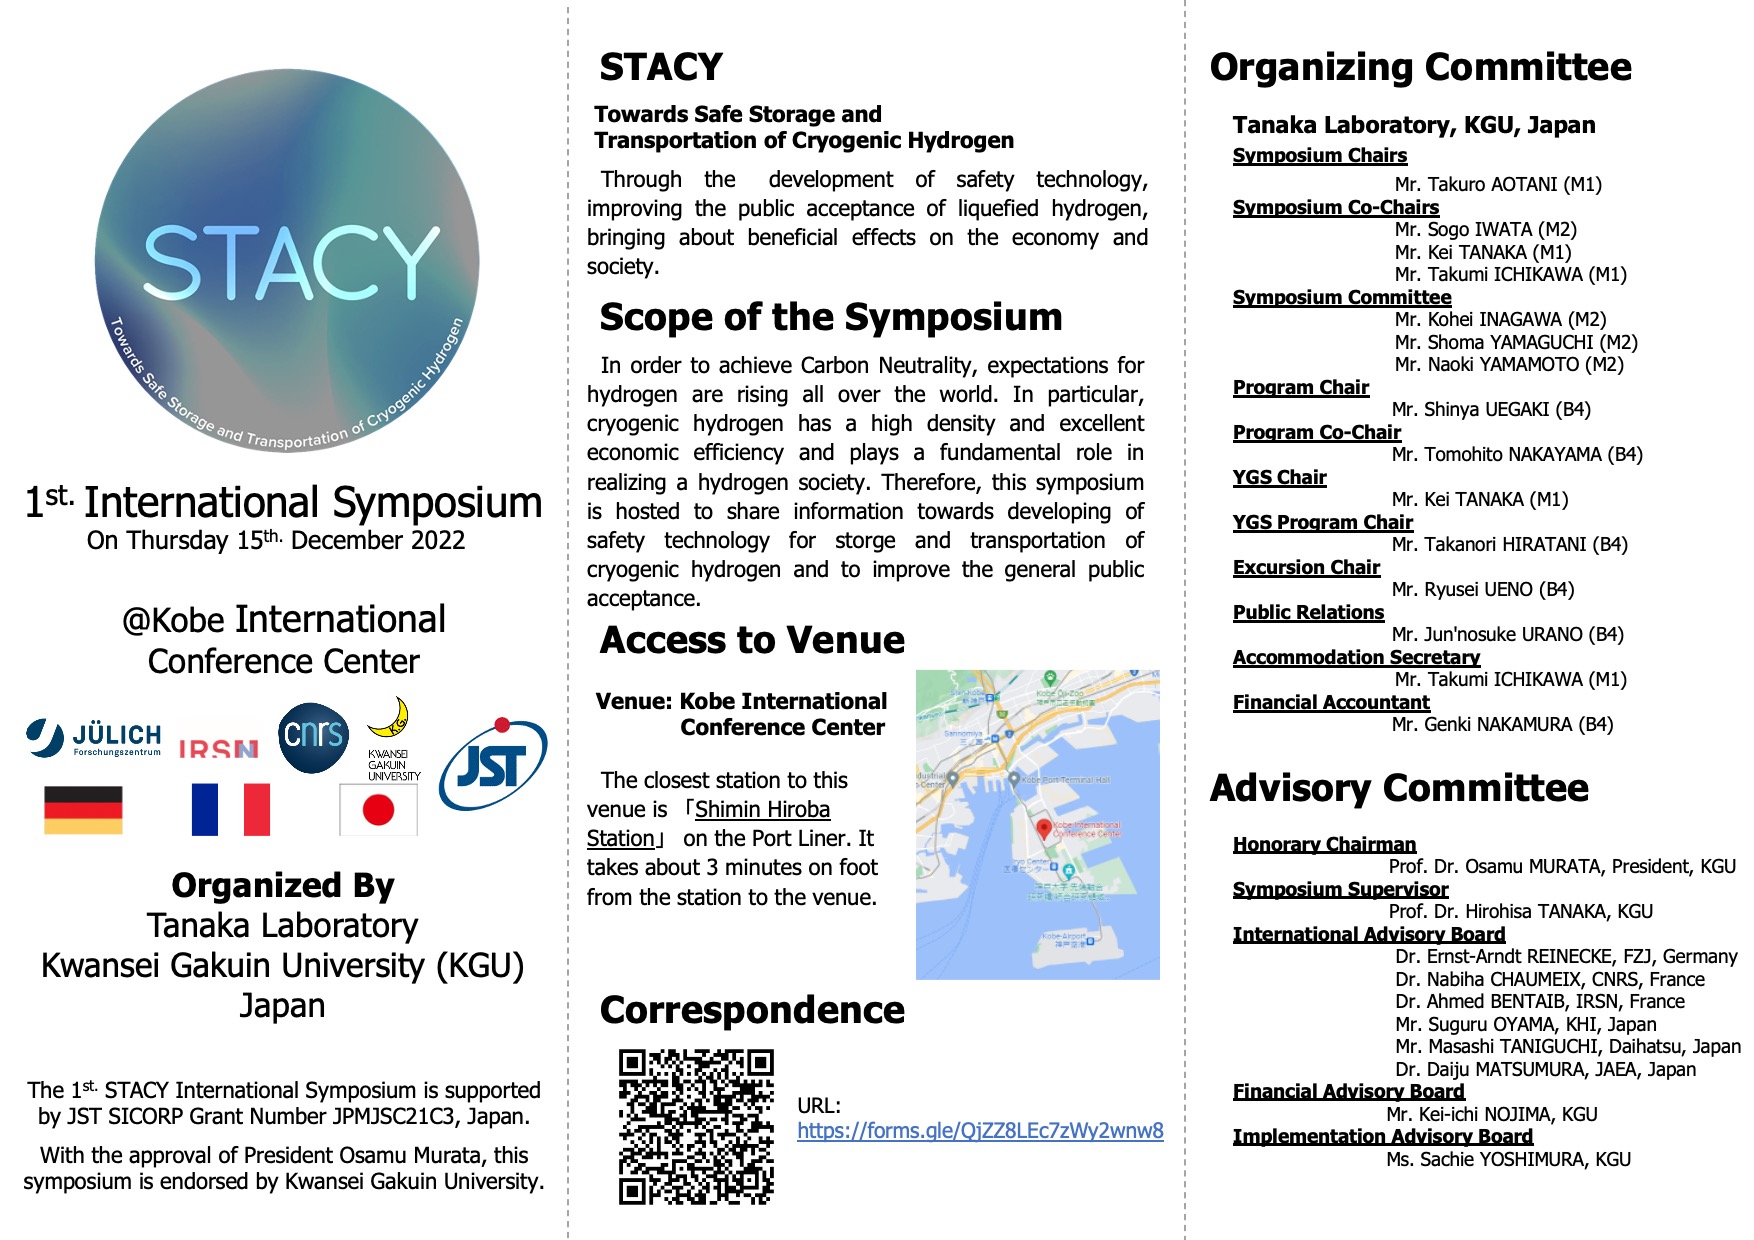 1st STACY International Symposium